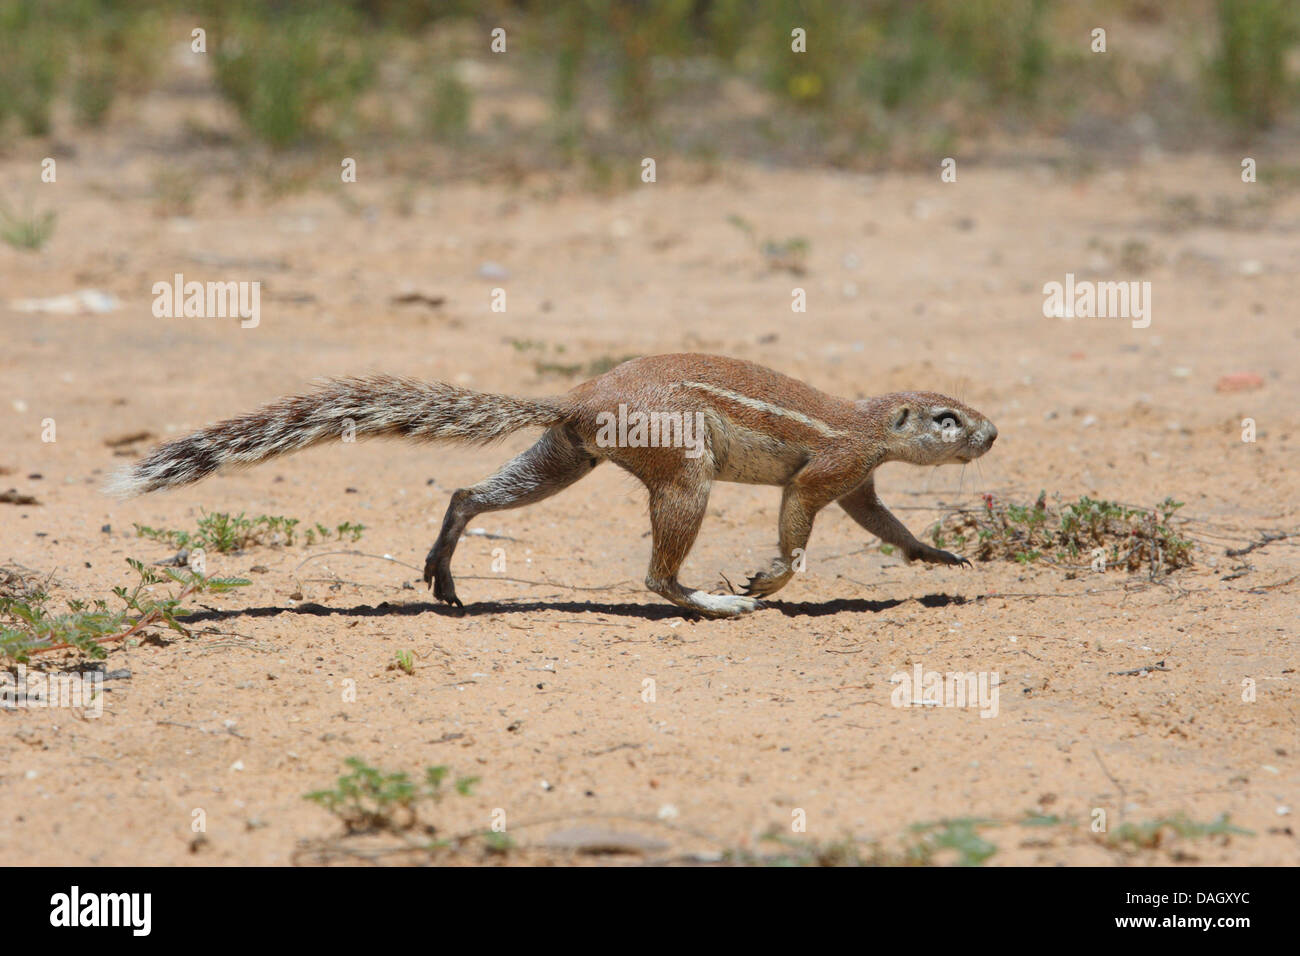 Südafrikanische Grundeichhörnchen, Kap-Borstenhörnchen (Geosciurus Inauris, Xerus Inauris), Fuß über Boden Boden, Südafrika Kgalagadi Transfrontier National Park Stockfoto